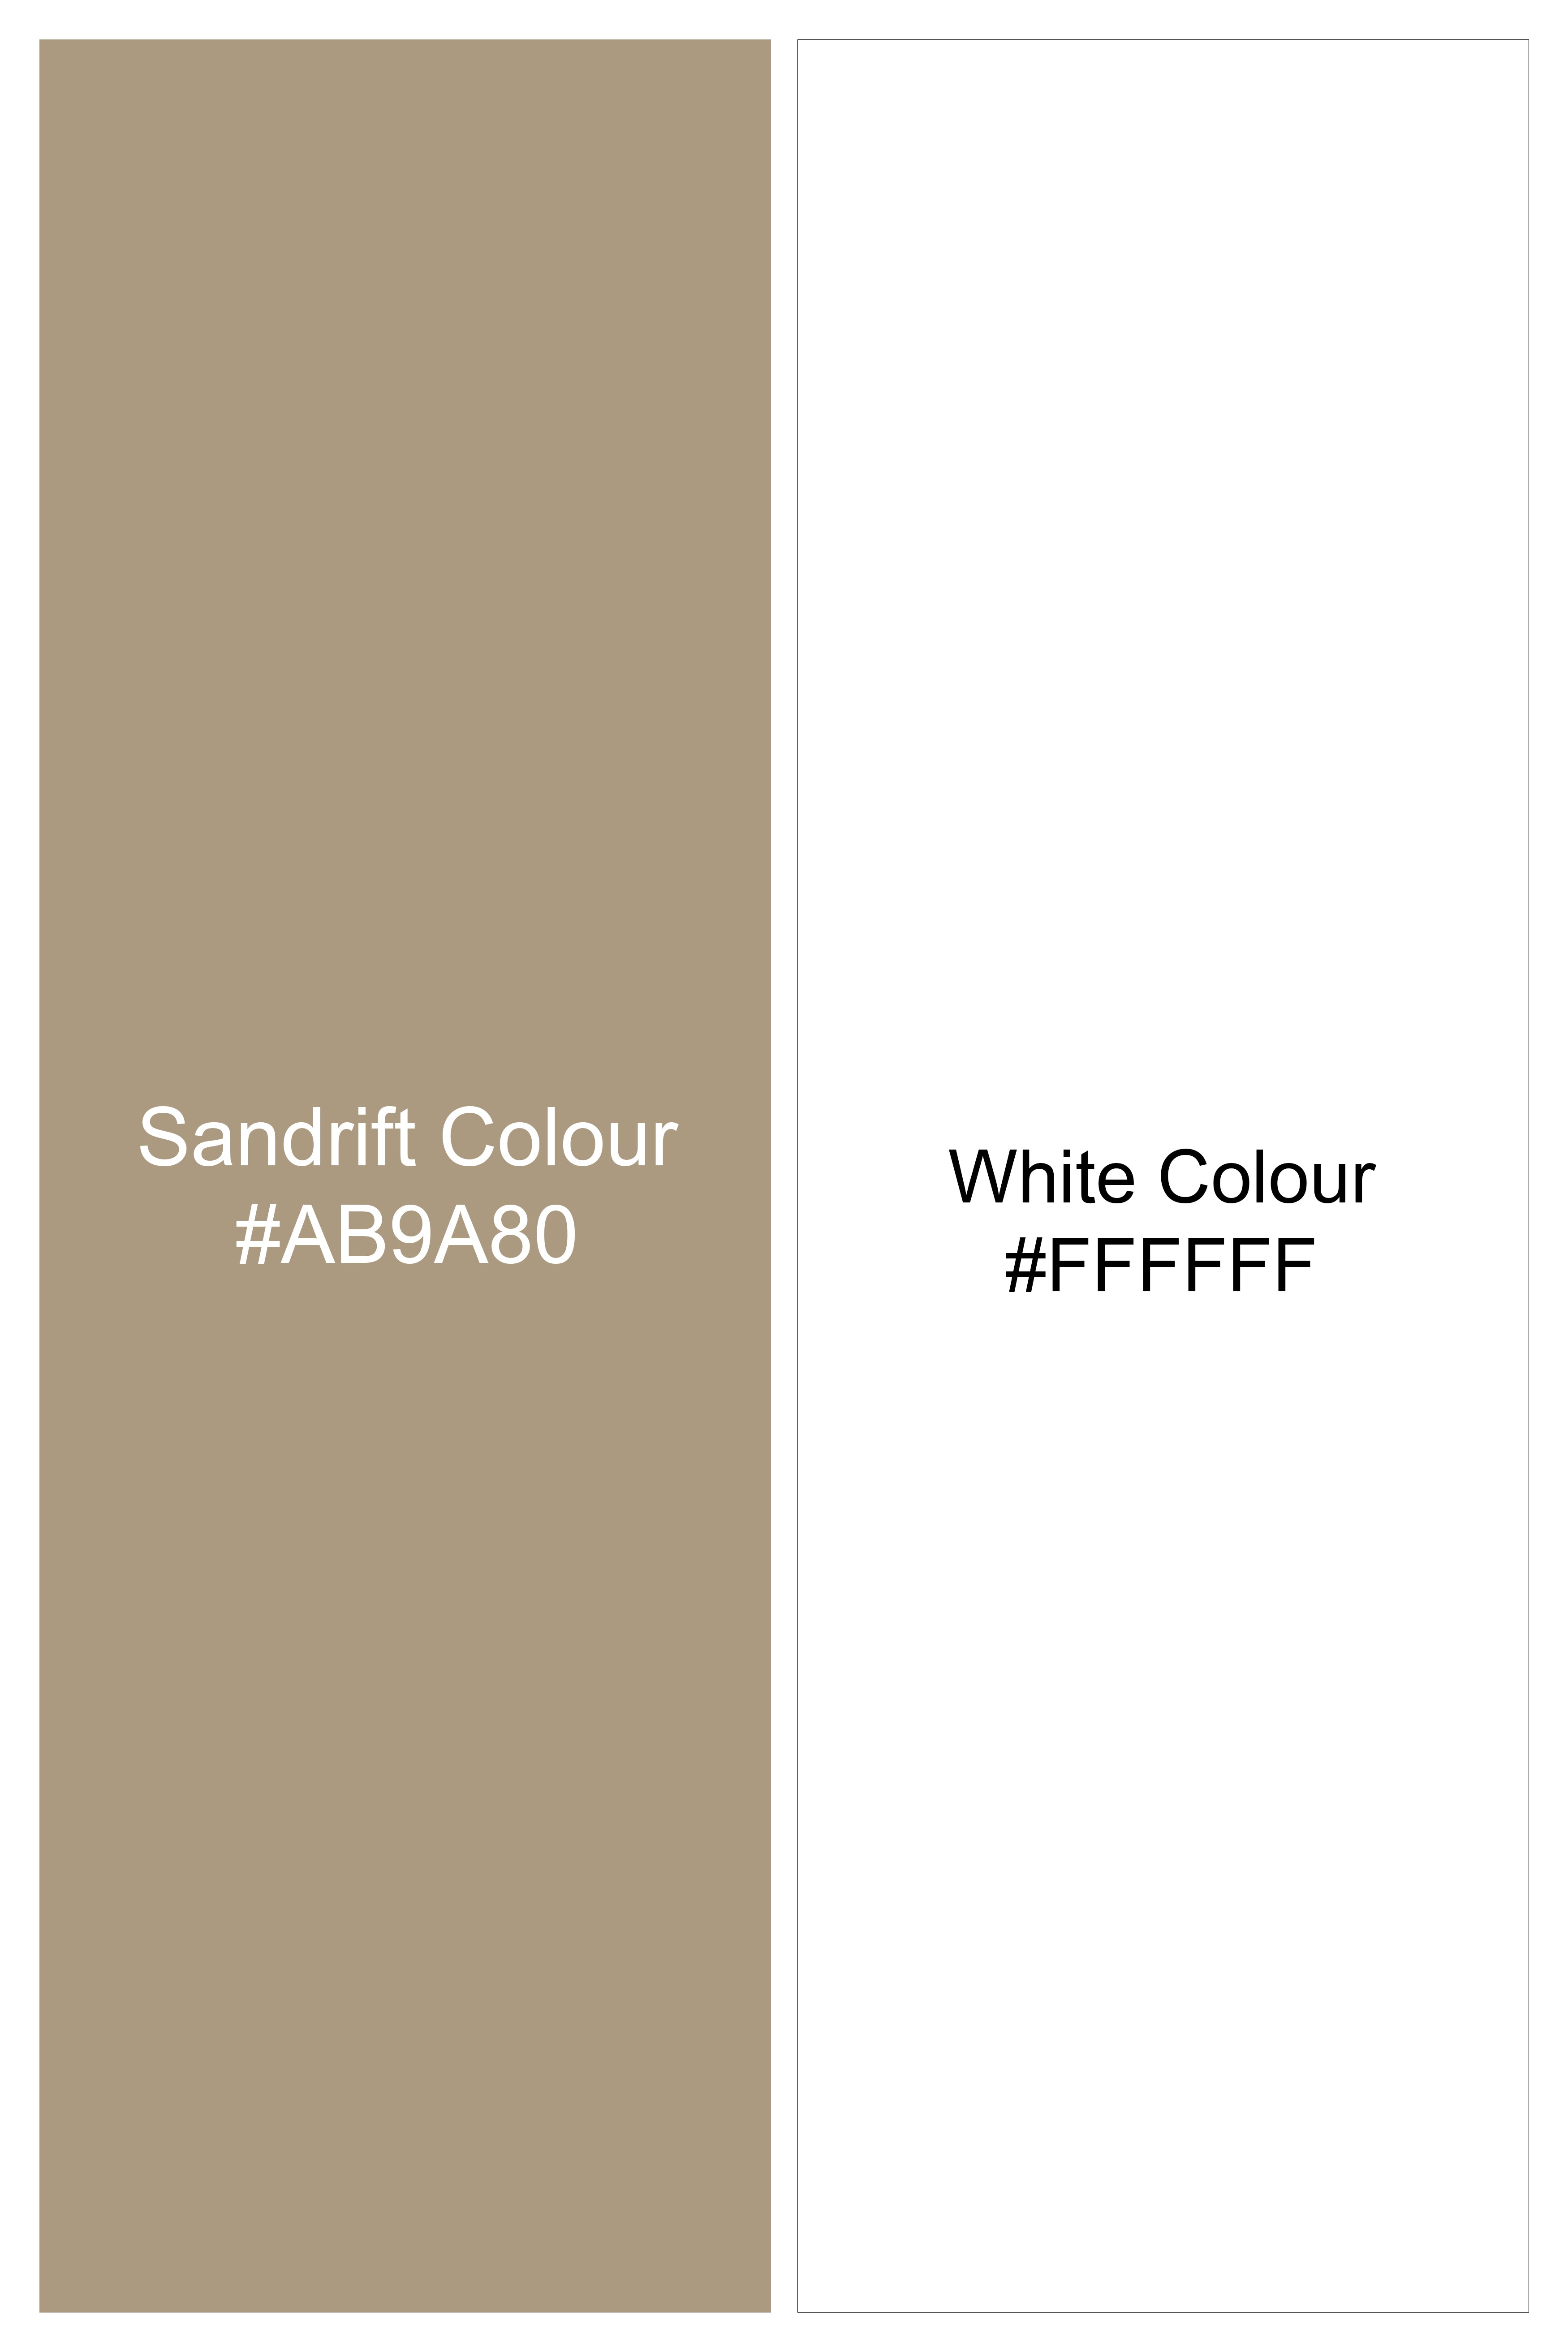 Sandrift Cream with White Plaid Wool Blend Waistcoat